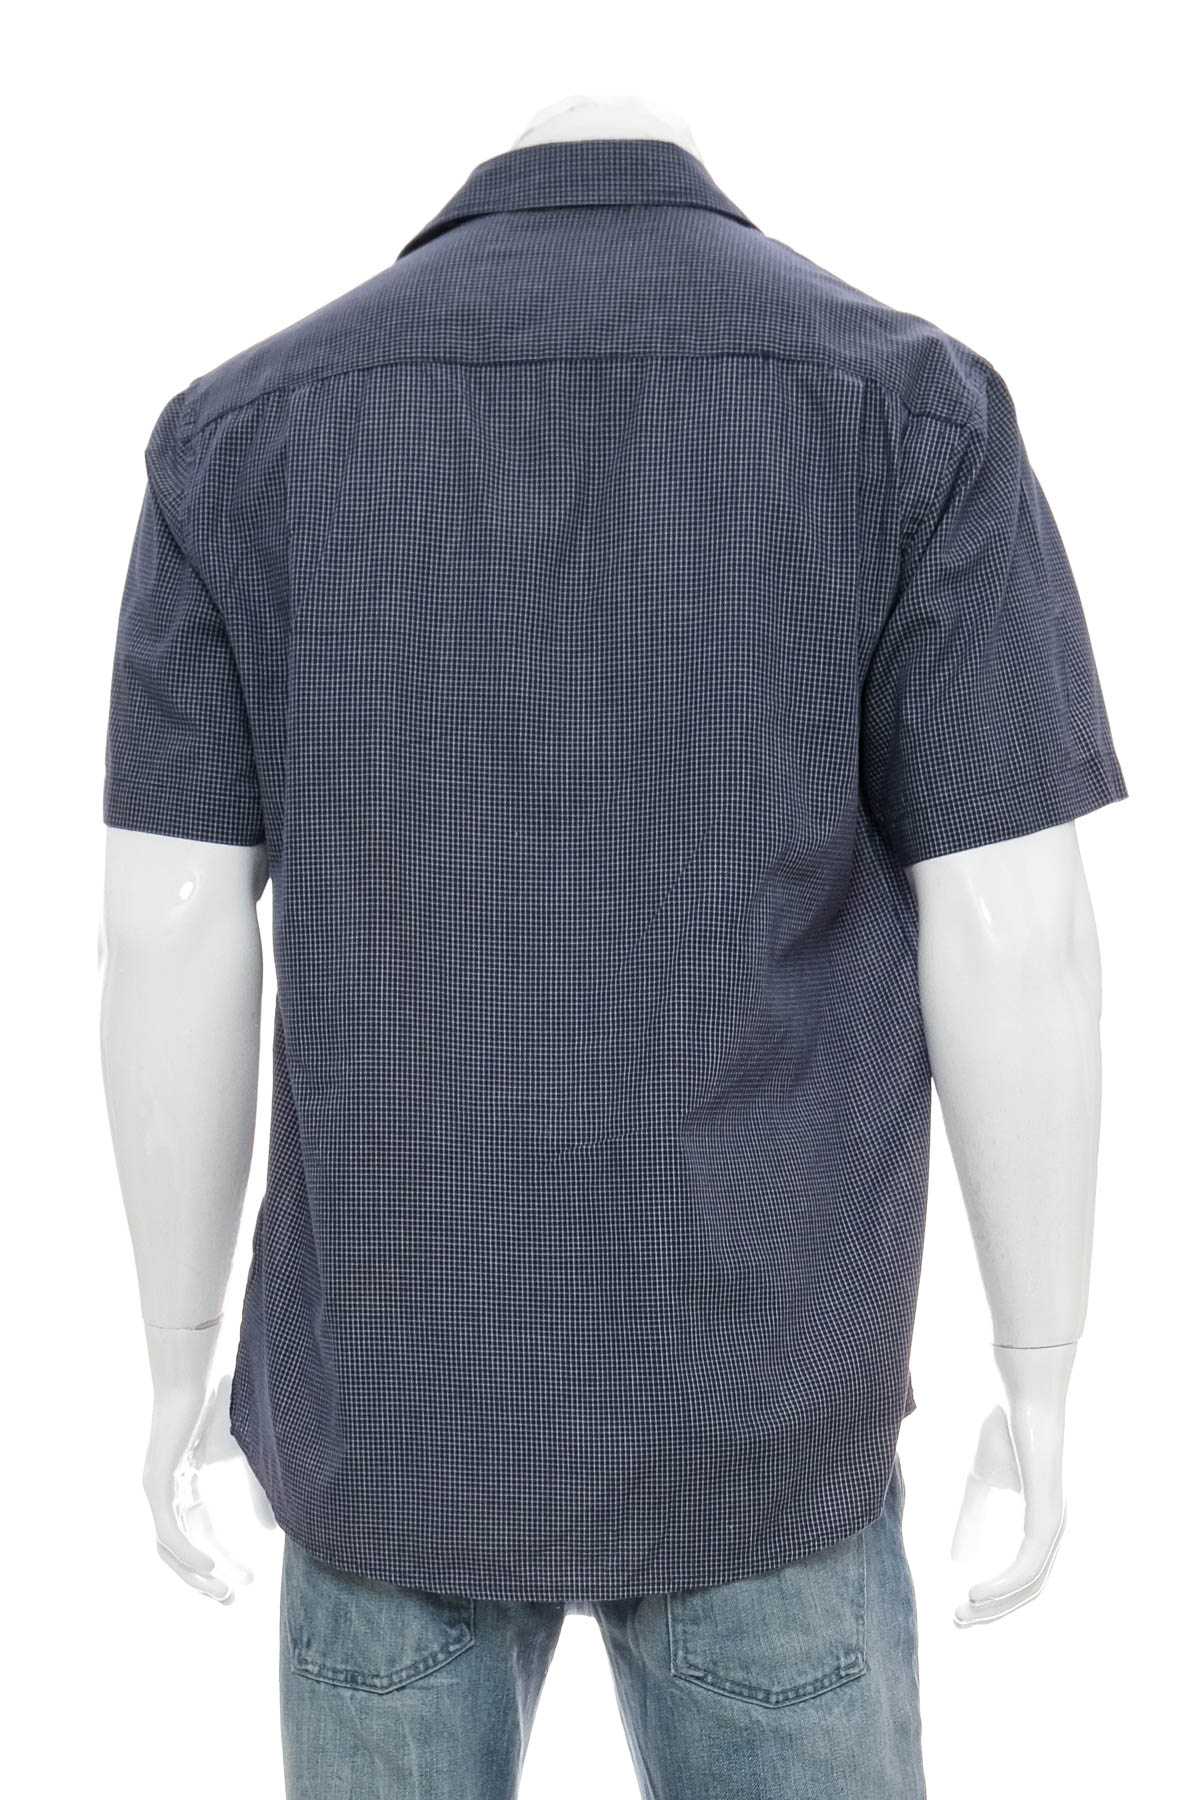 Men's shirt - Pierre Cardin - 1